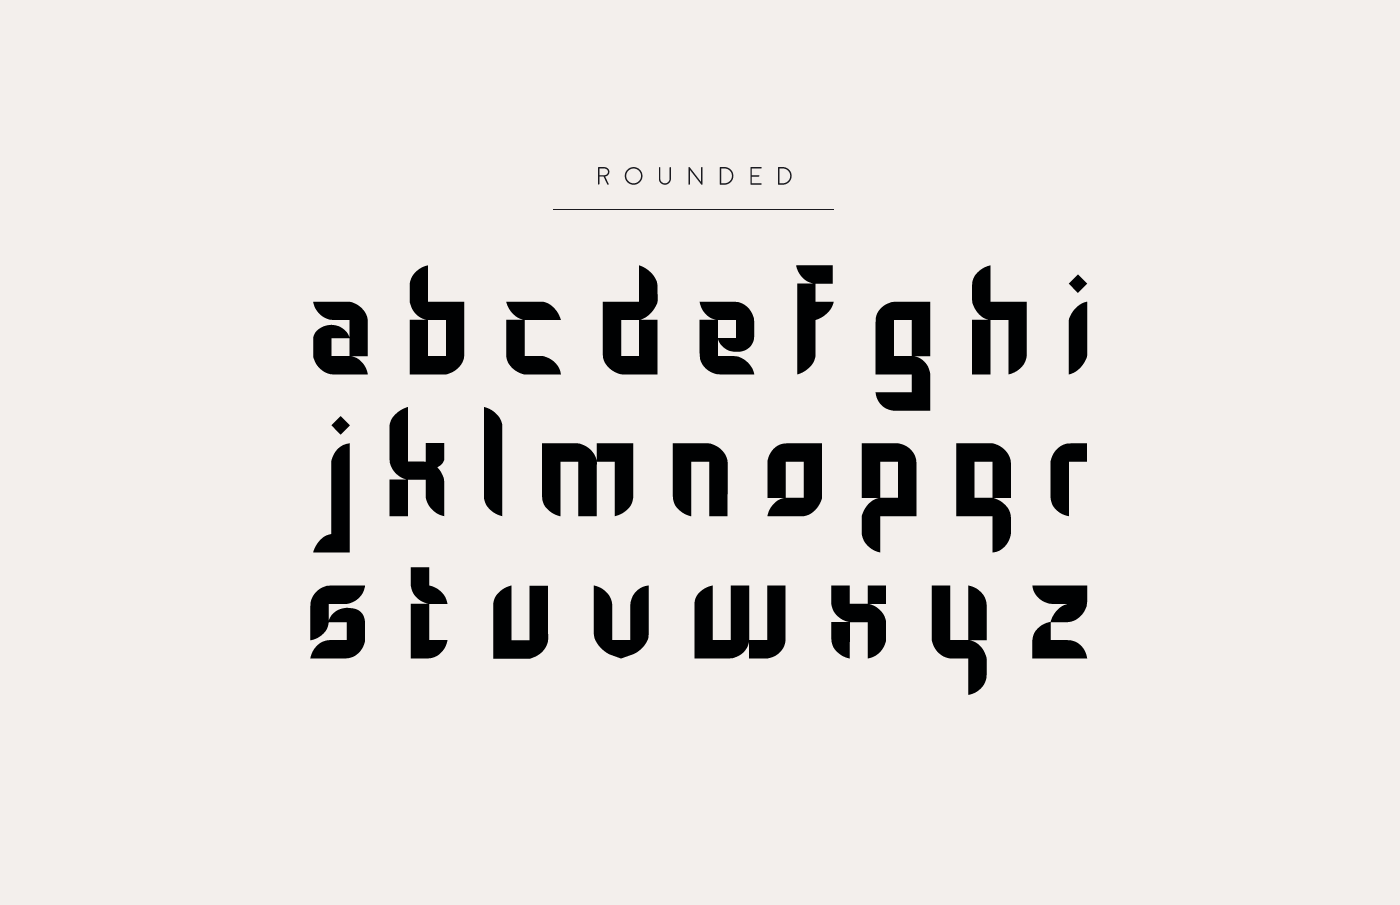 gothic black letter modular Typeface font free